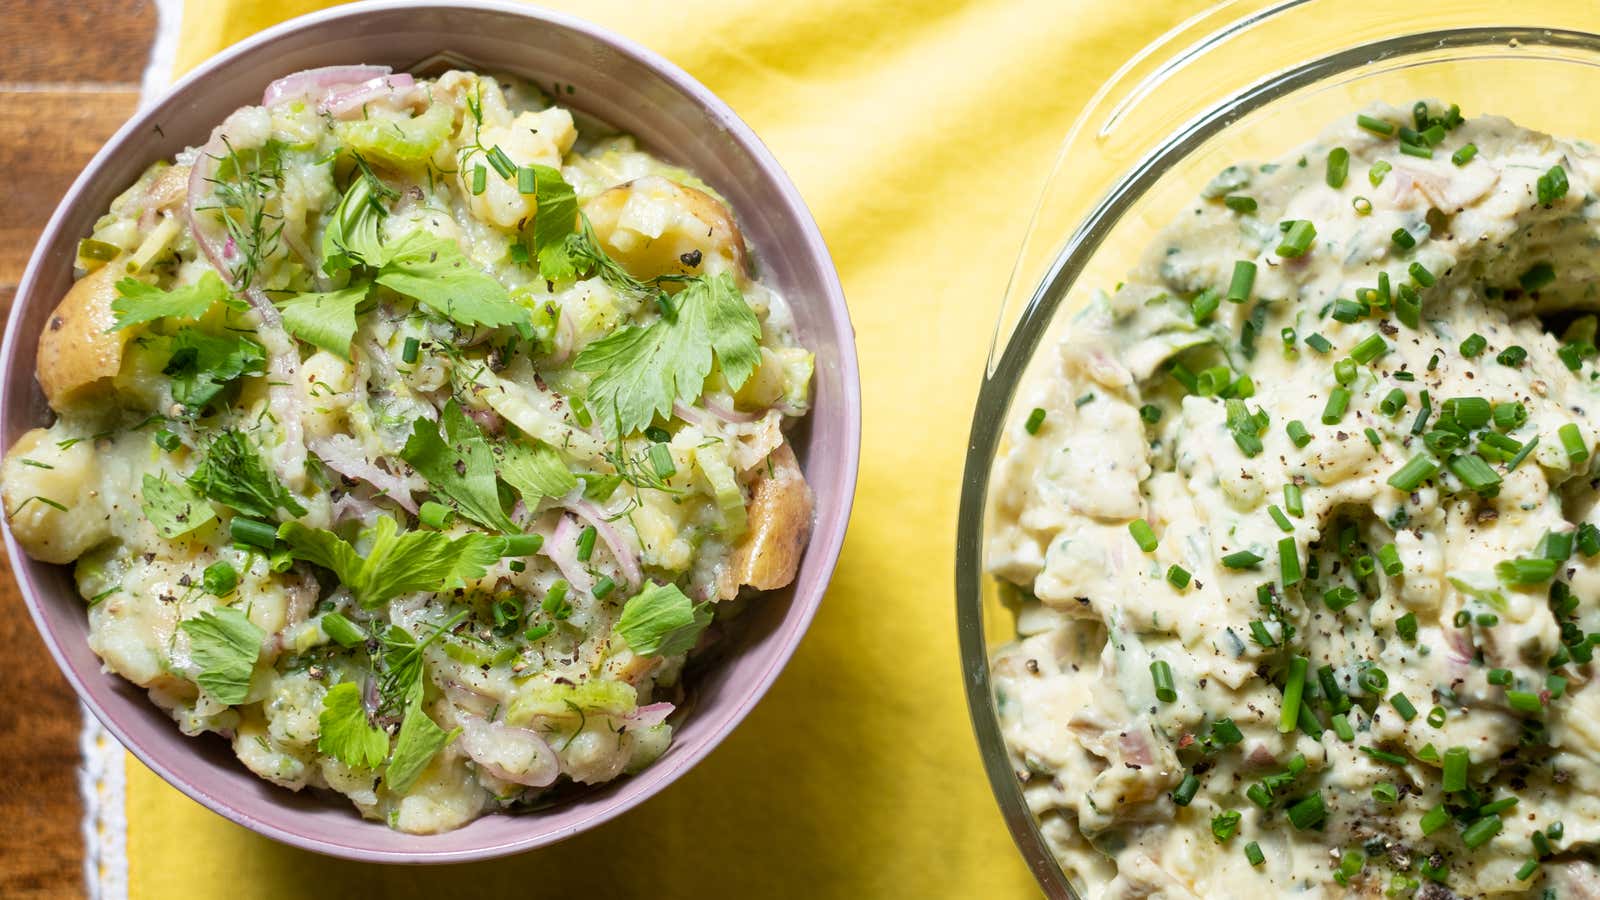 How to Make Extra-Creamy Potato Salad With Less Mayo